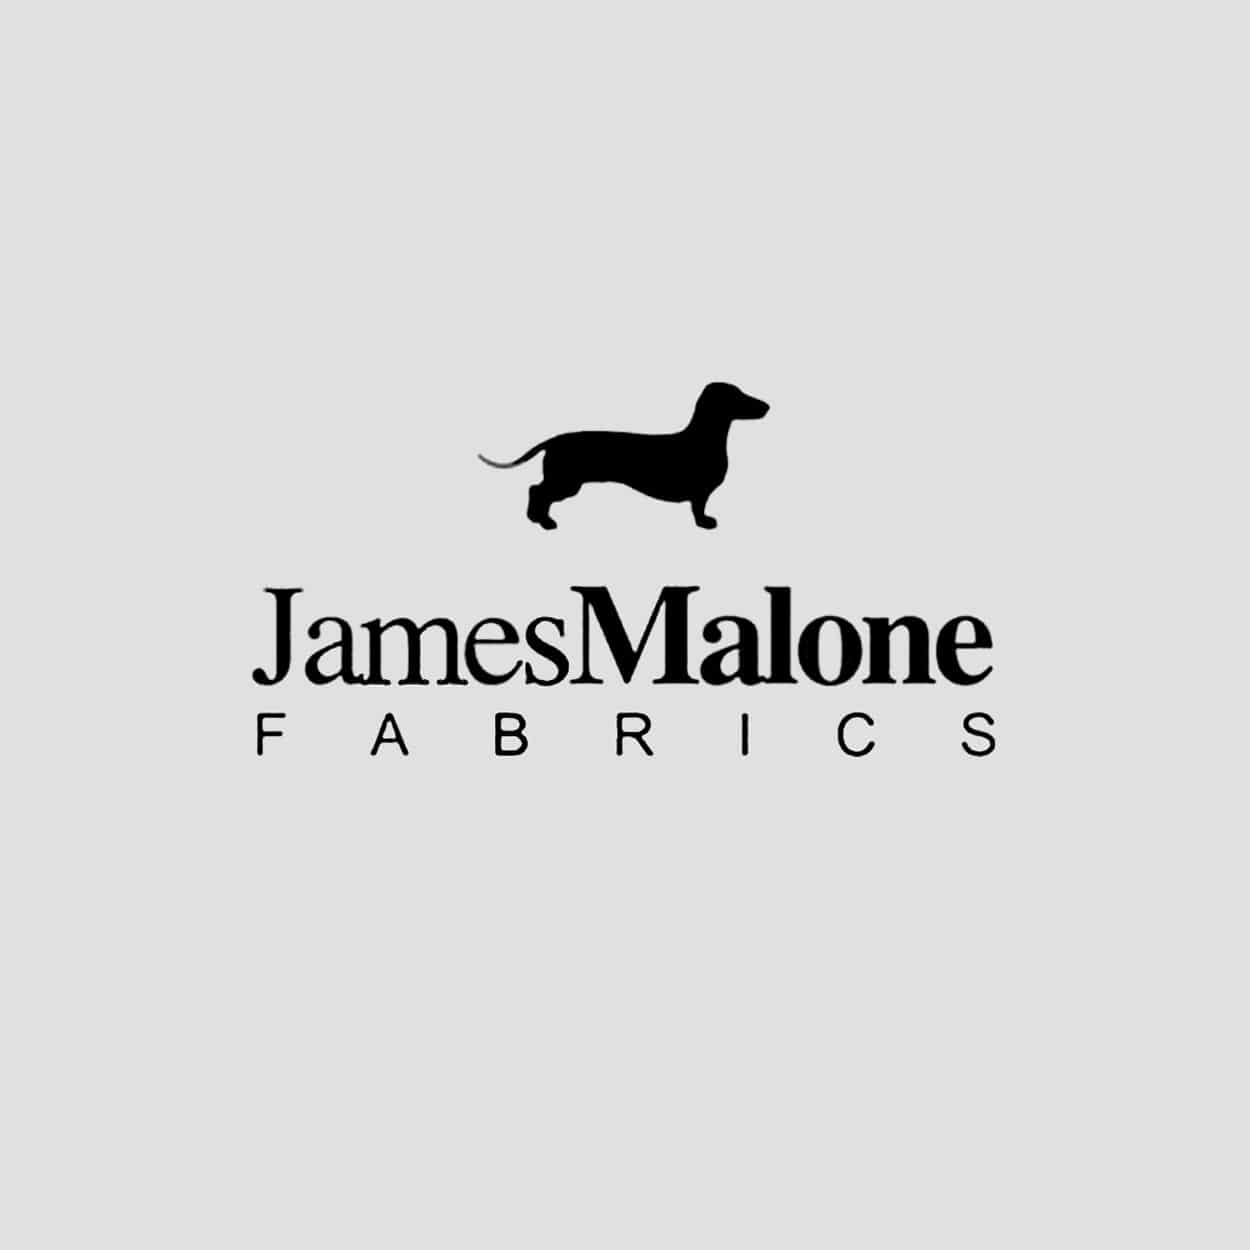 James malone logo.jpg